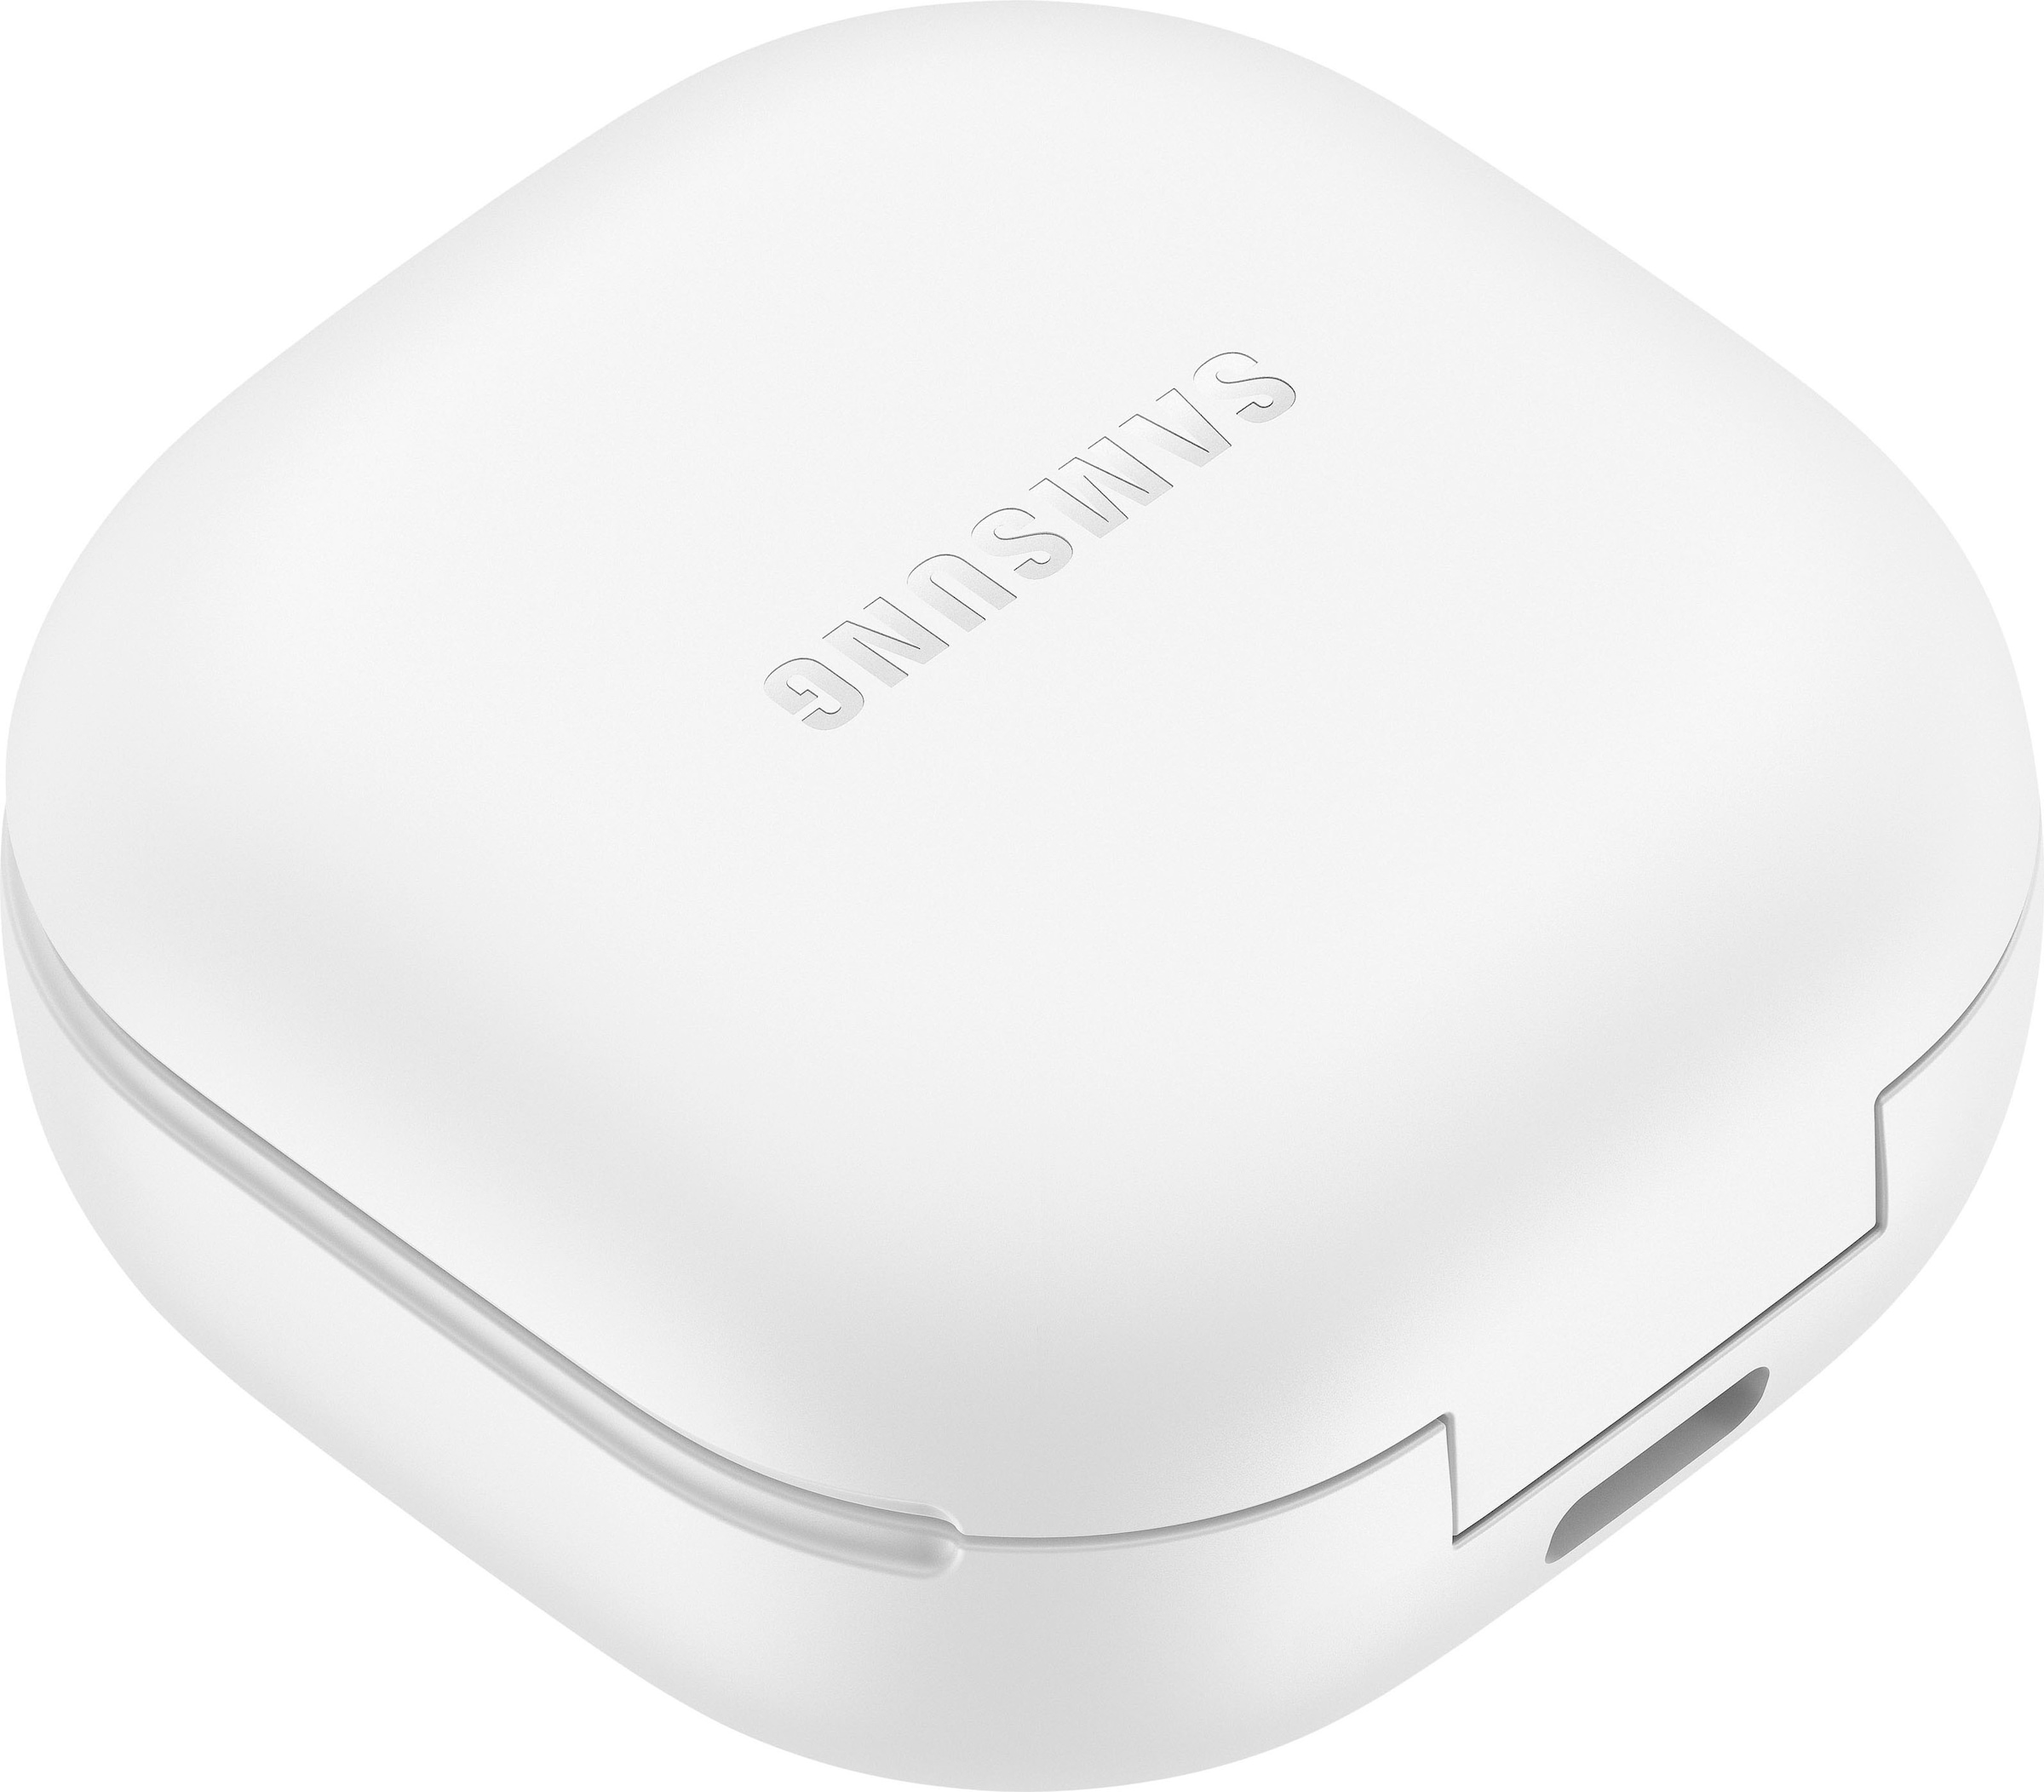 Samsung wireless In-Ear-Kopfhörer »Galaxy Buds2 Pro«, A2DP Bluetooth-AVRCP Bluetooth-HFP, Active Noise Cancelling (ANC)-Freisprechfunktion-Sprachsteuerung